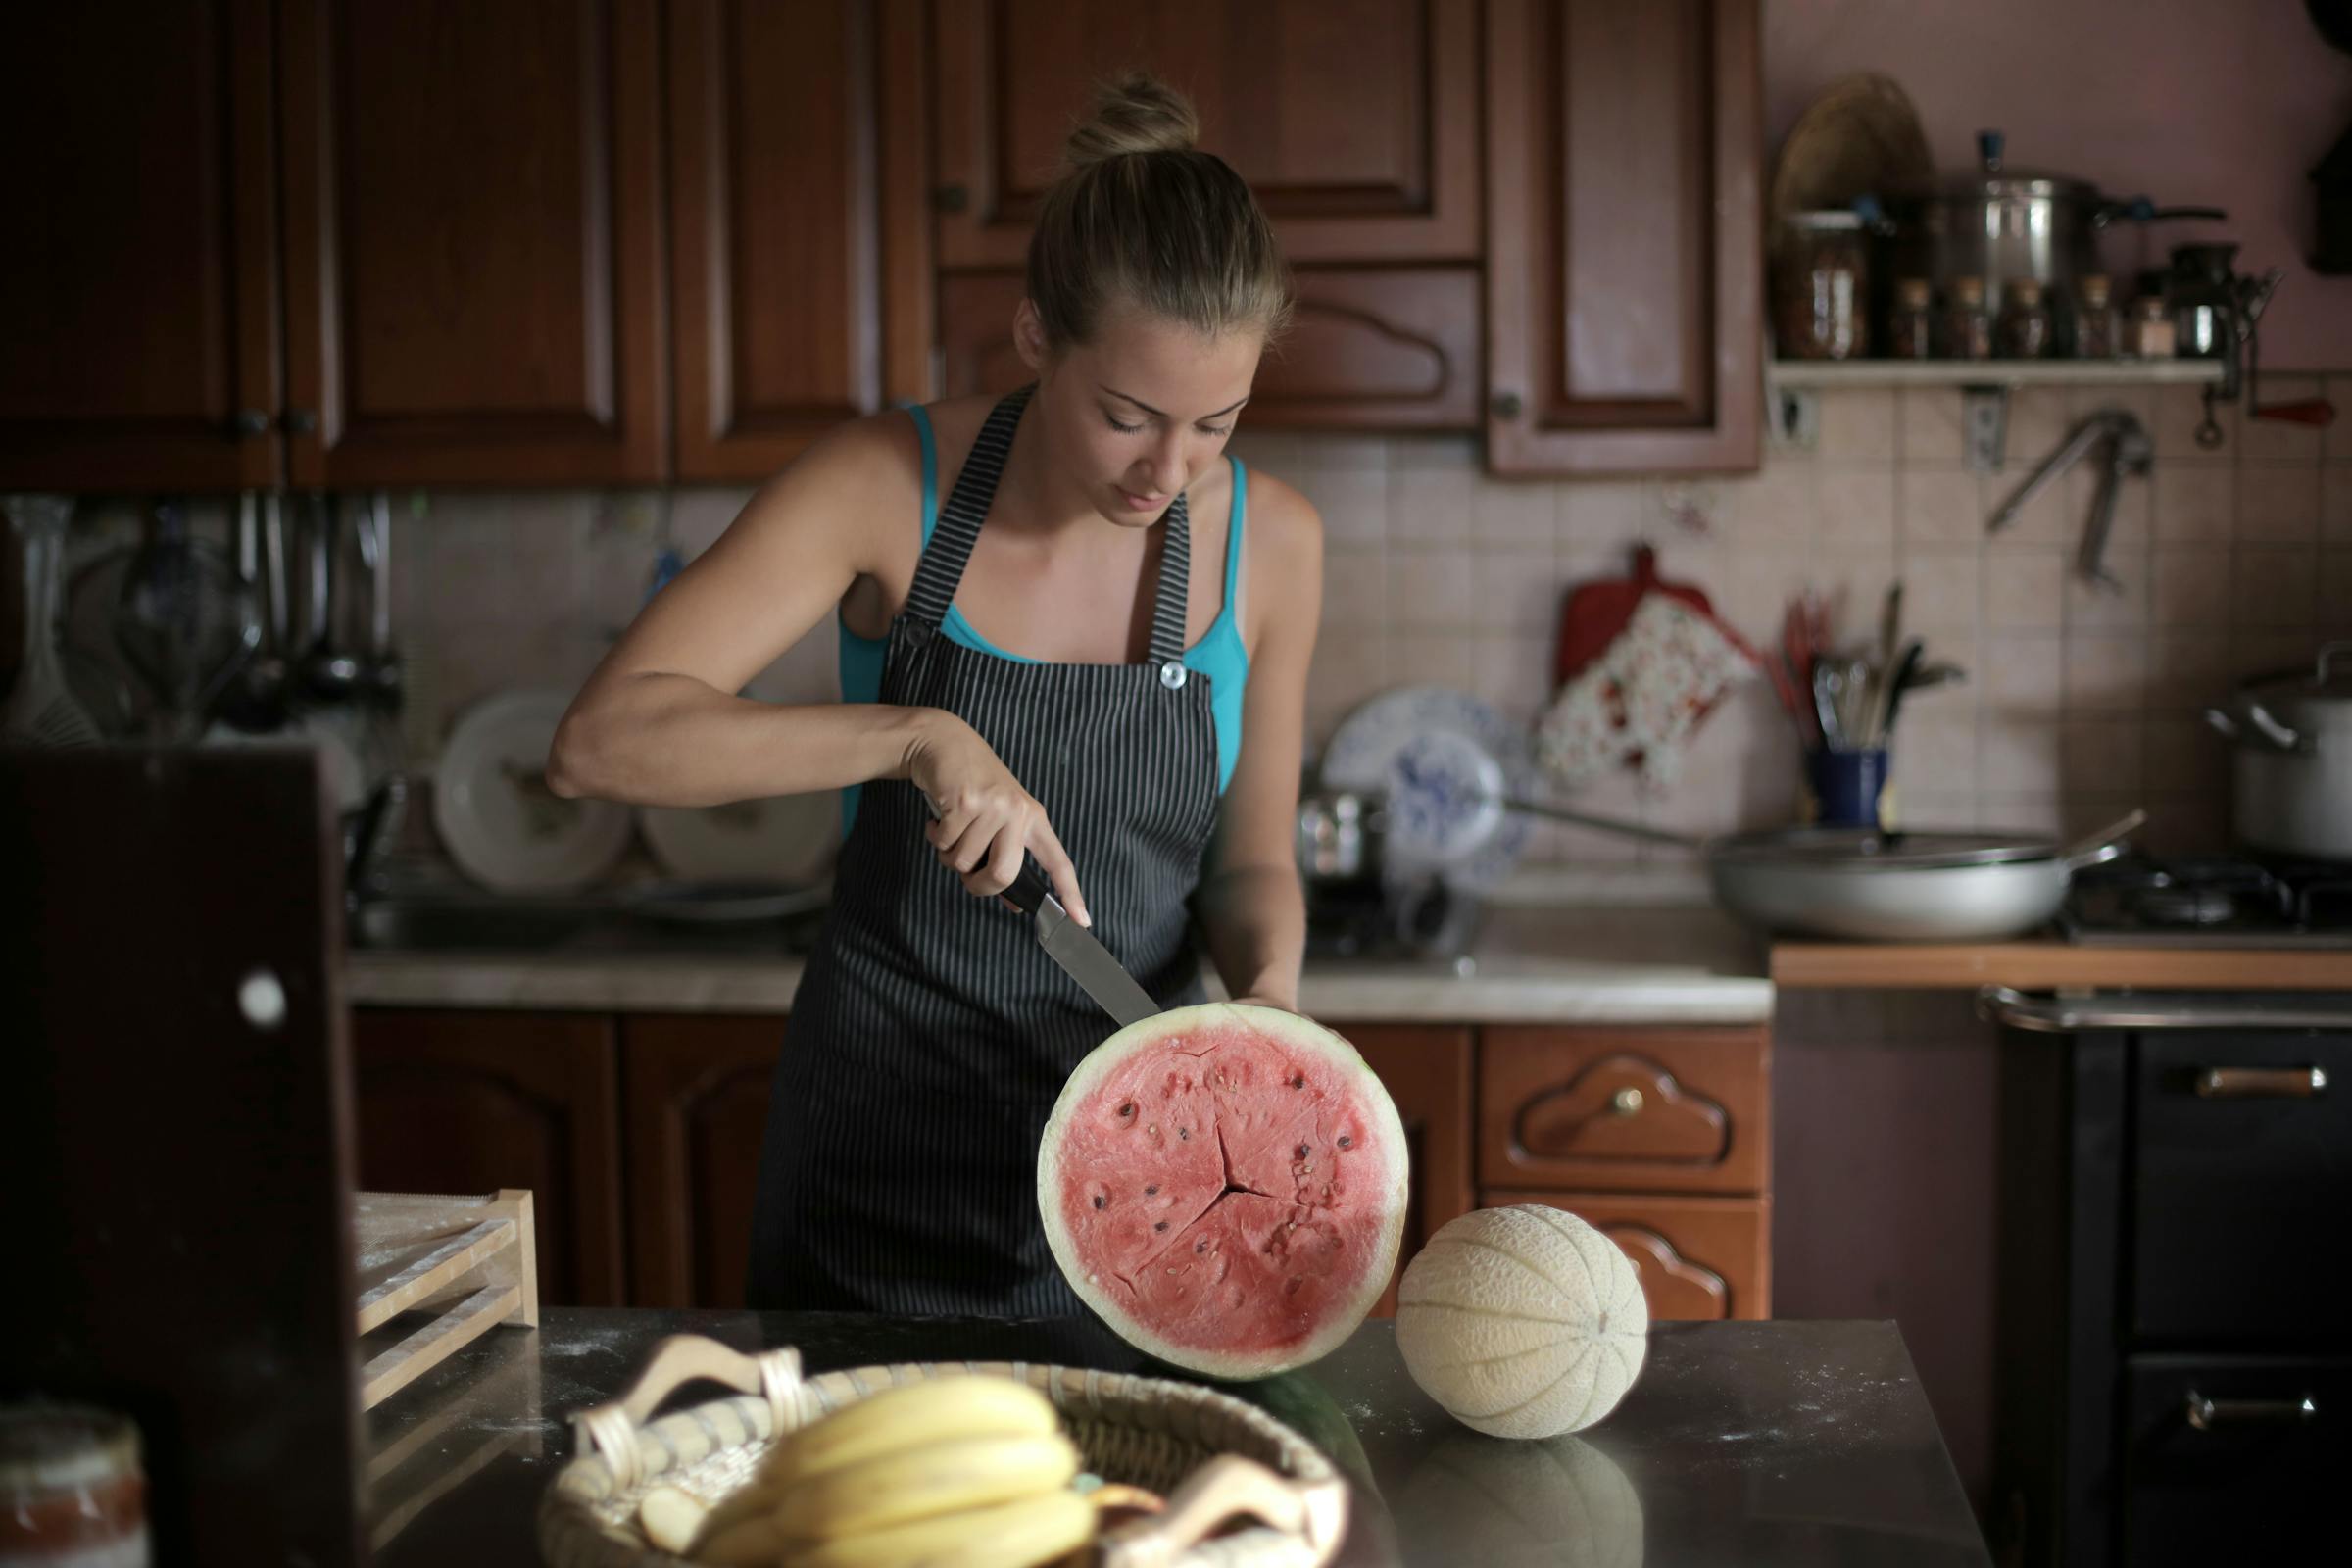 Woman cutting a watermelon | Source: Pexels